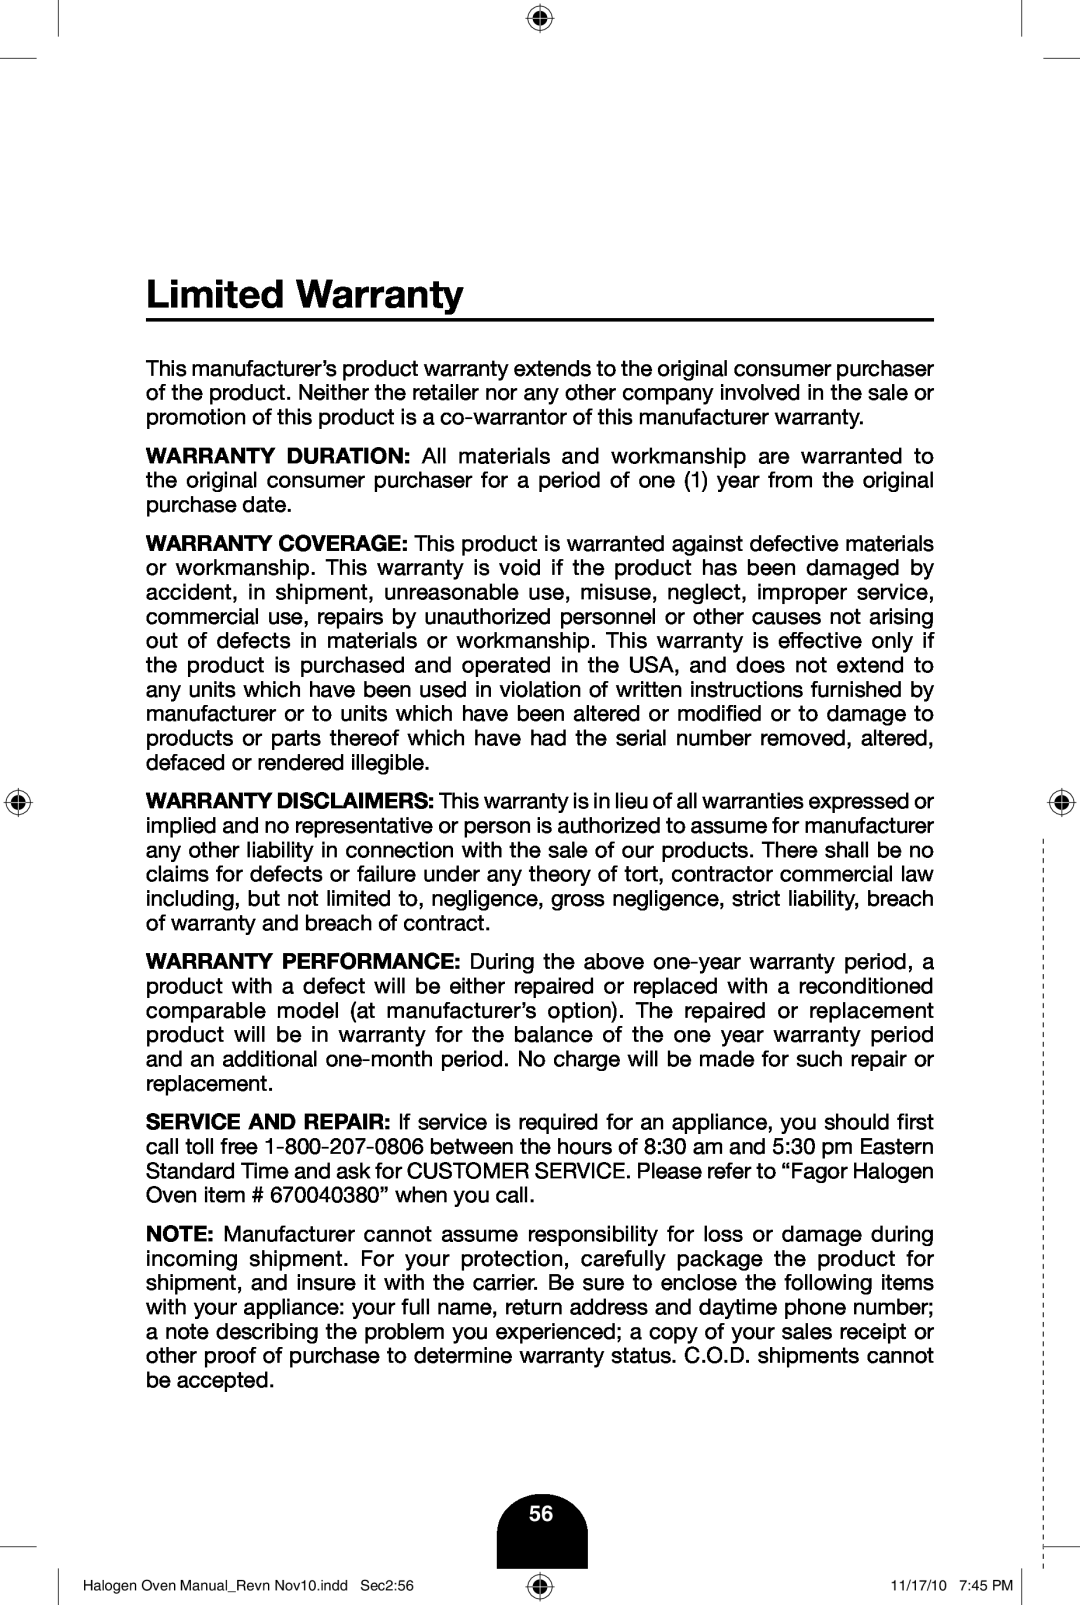 Fagor America 670040380 user manual Limited Warranty 